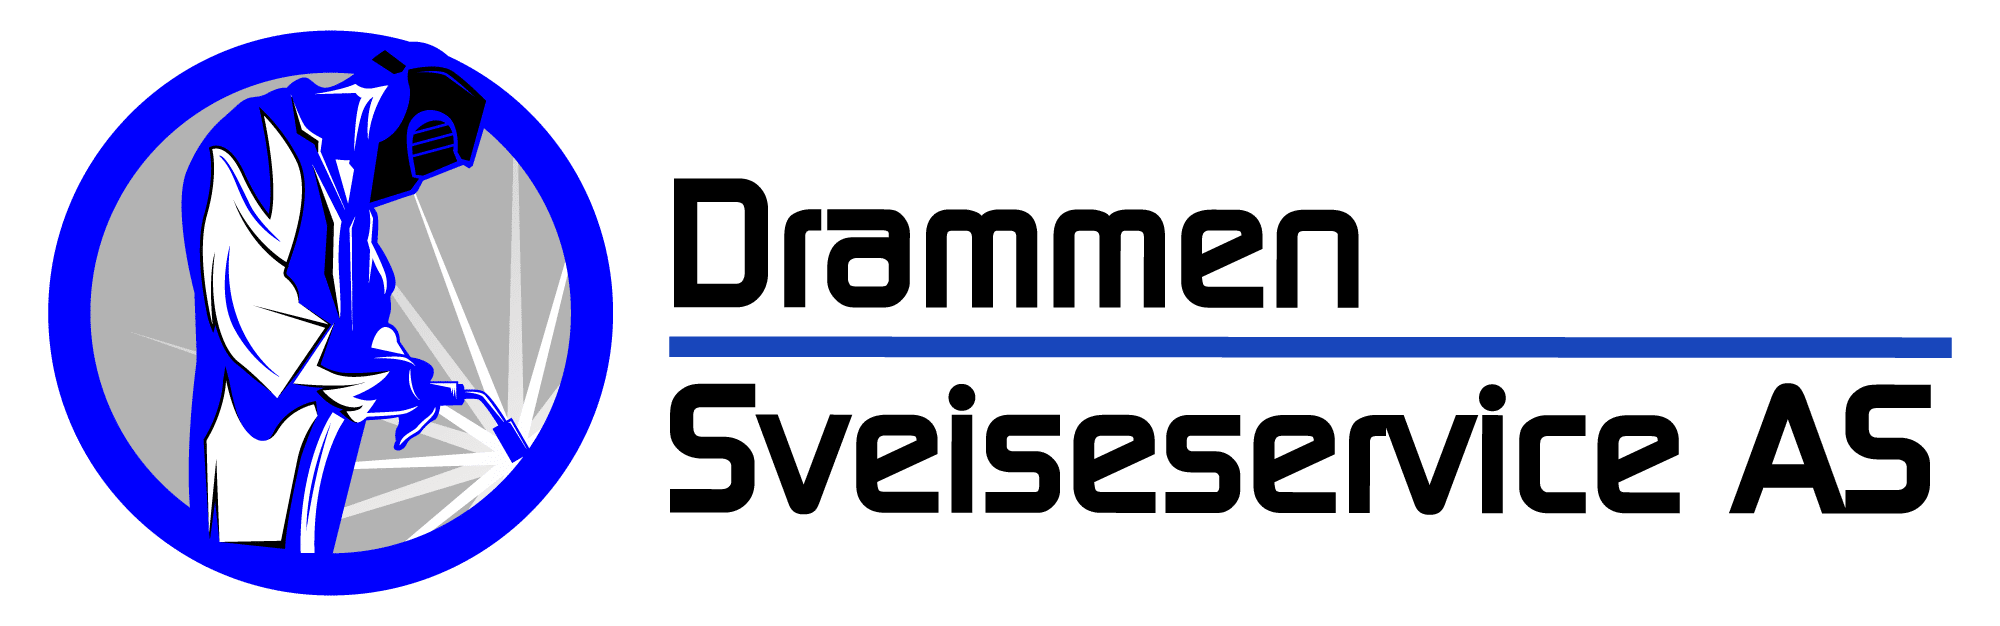 Drammen Sveiseservice AS liggende logo sort